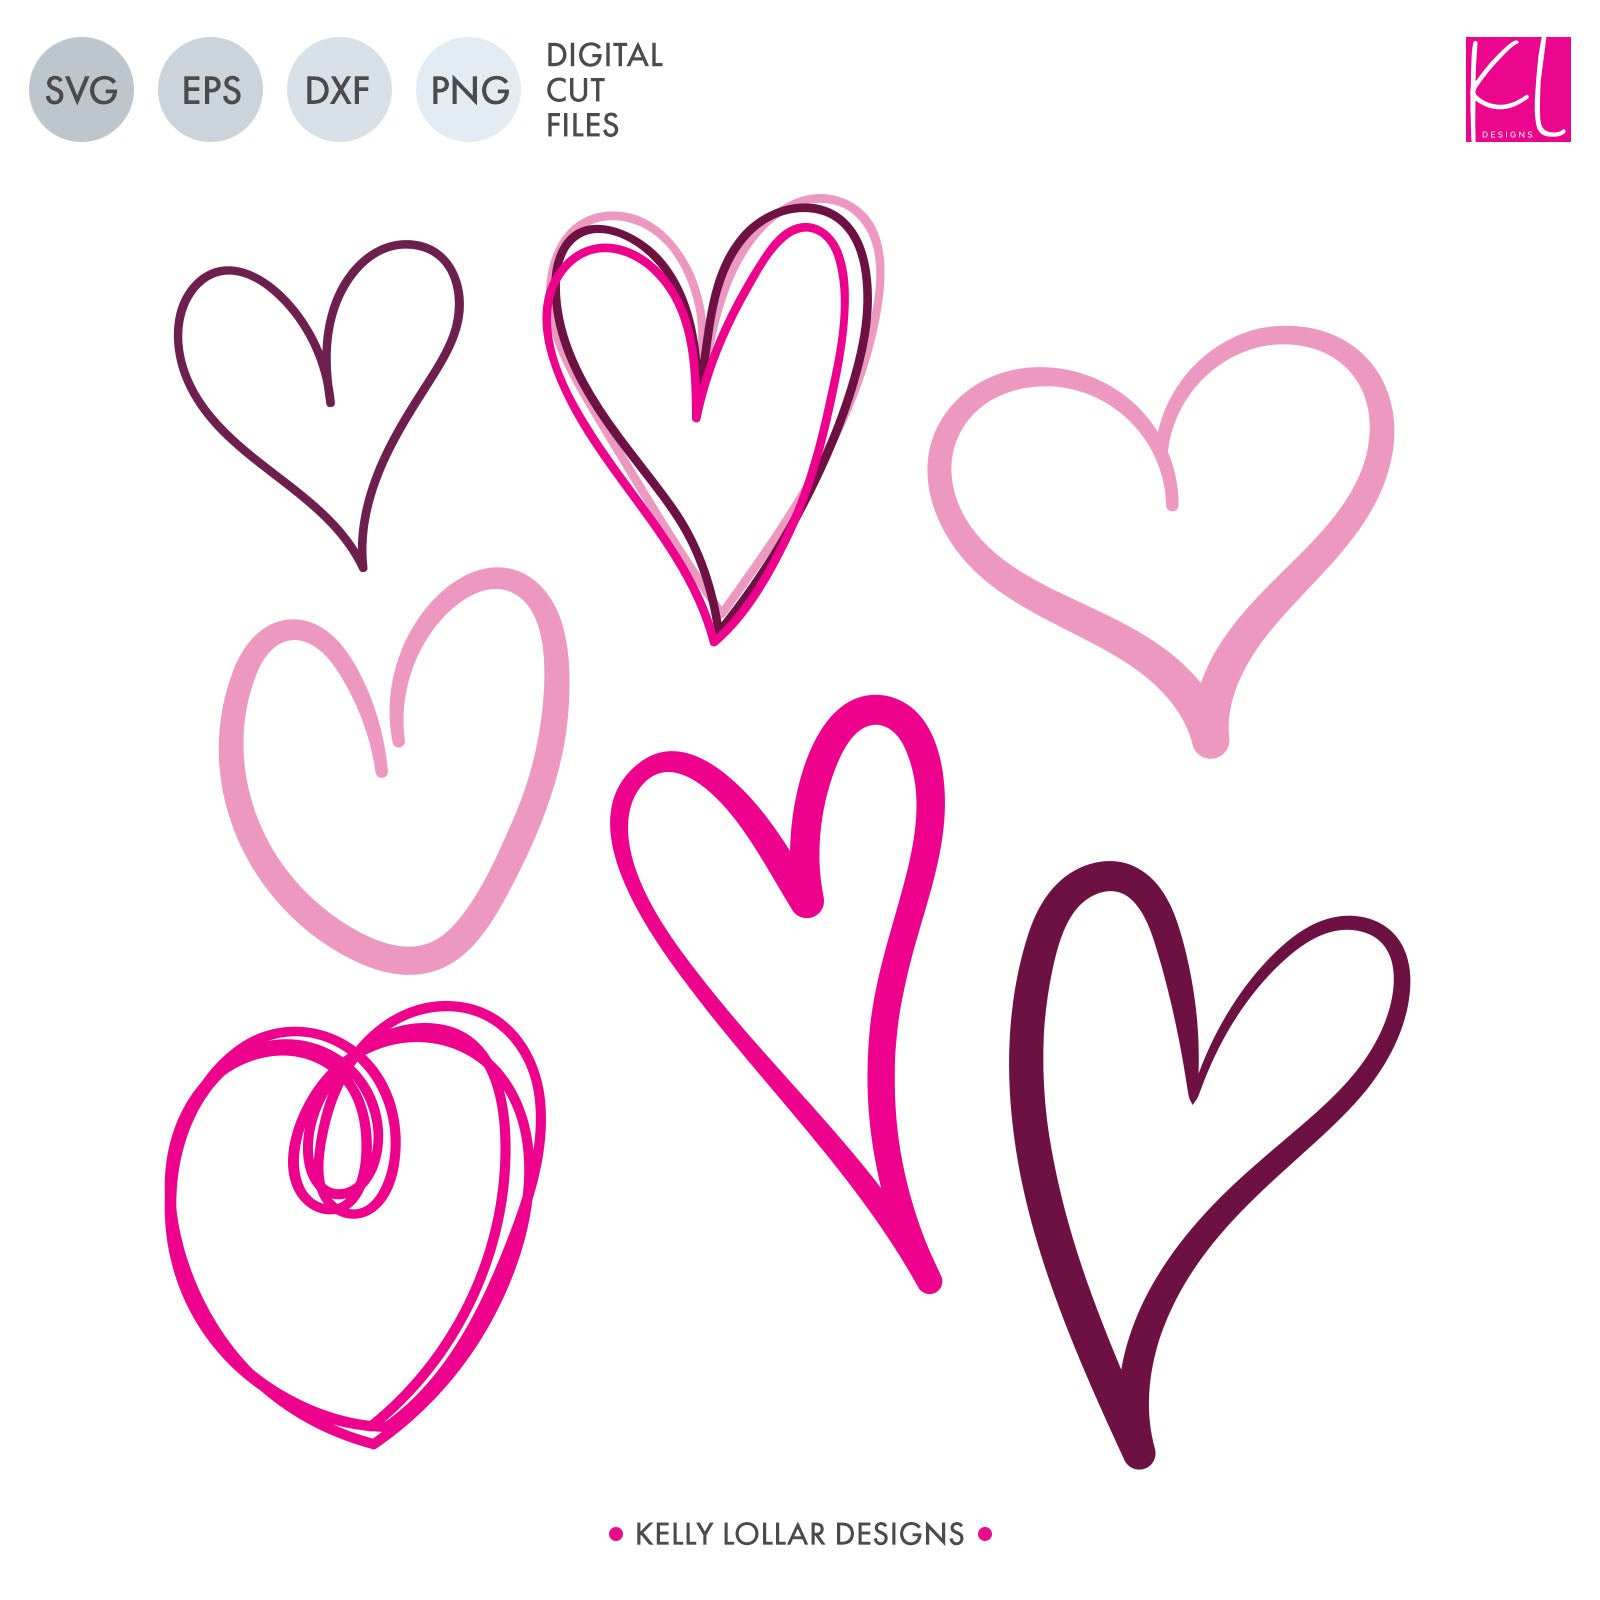 Free Doodle Hearts SVG Cut Files - Kelly Lollar Designs